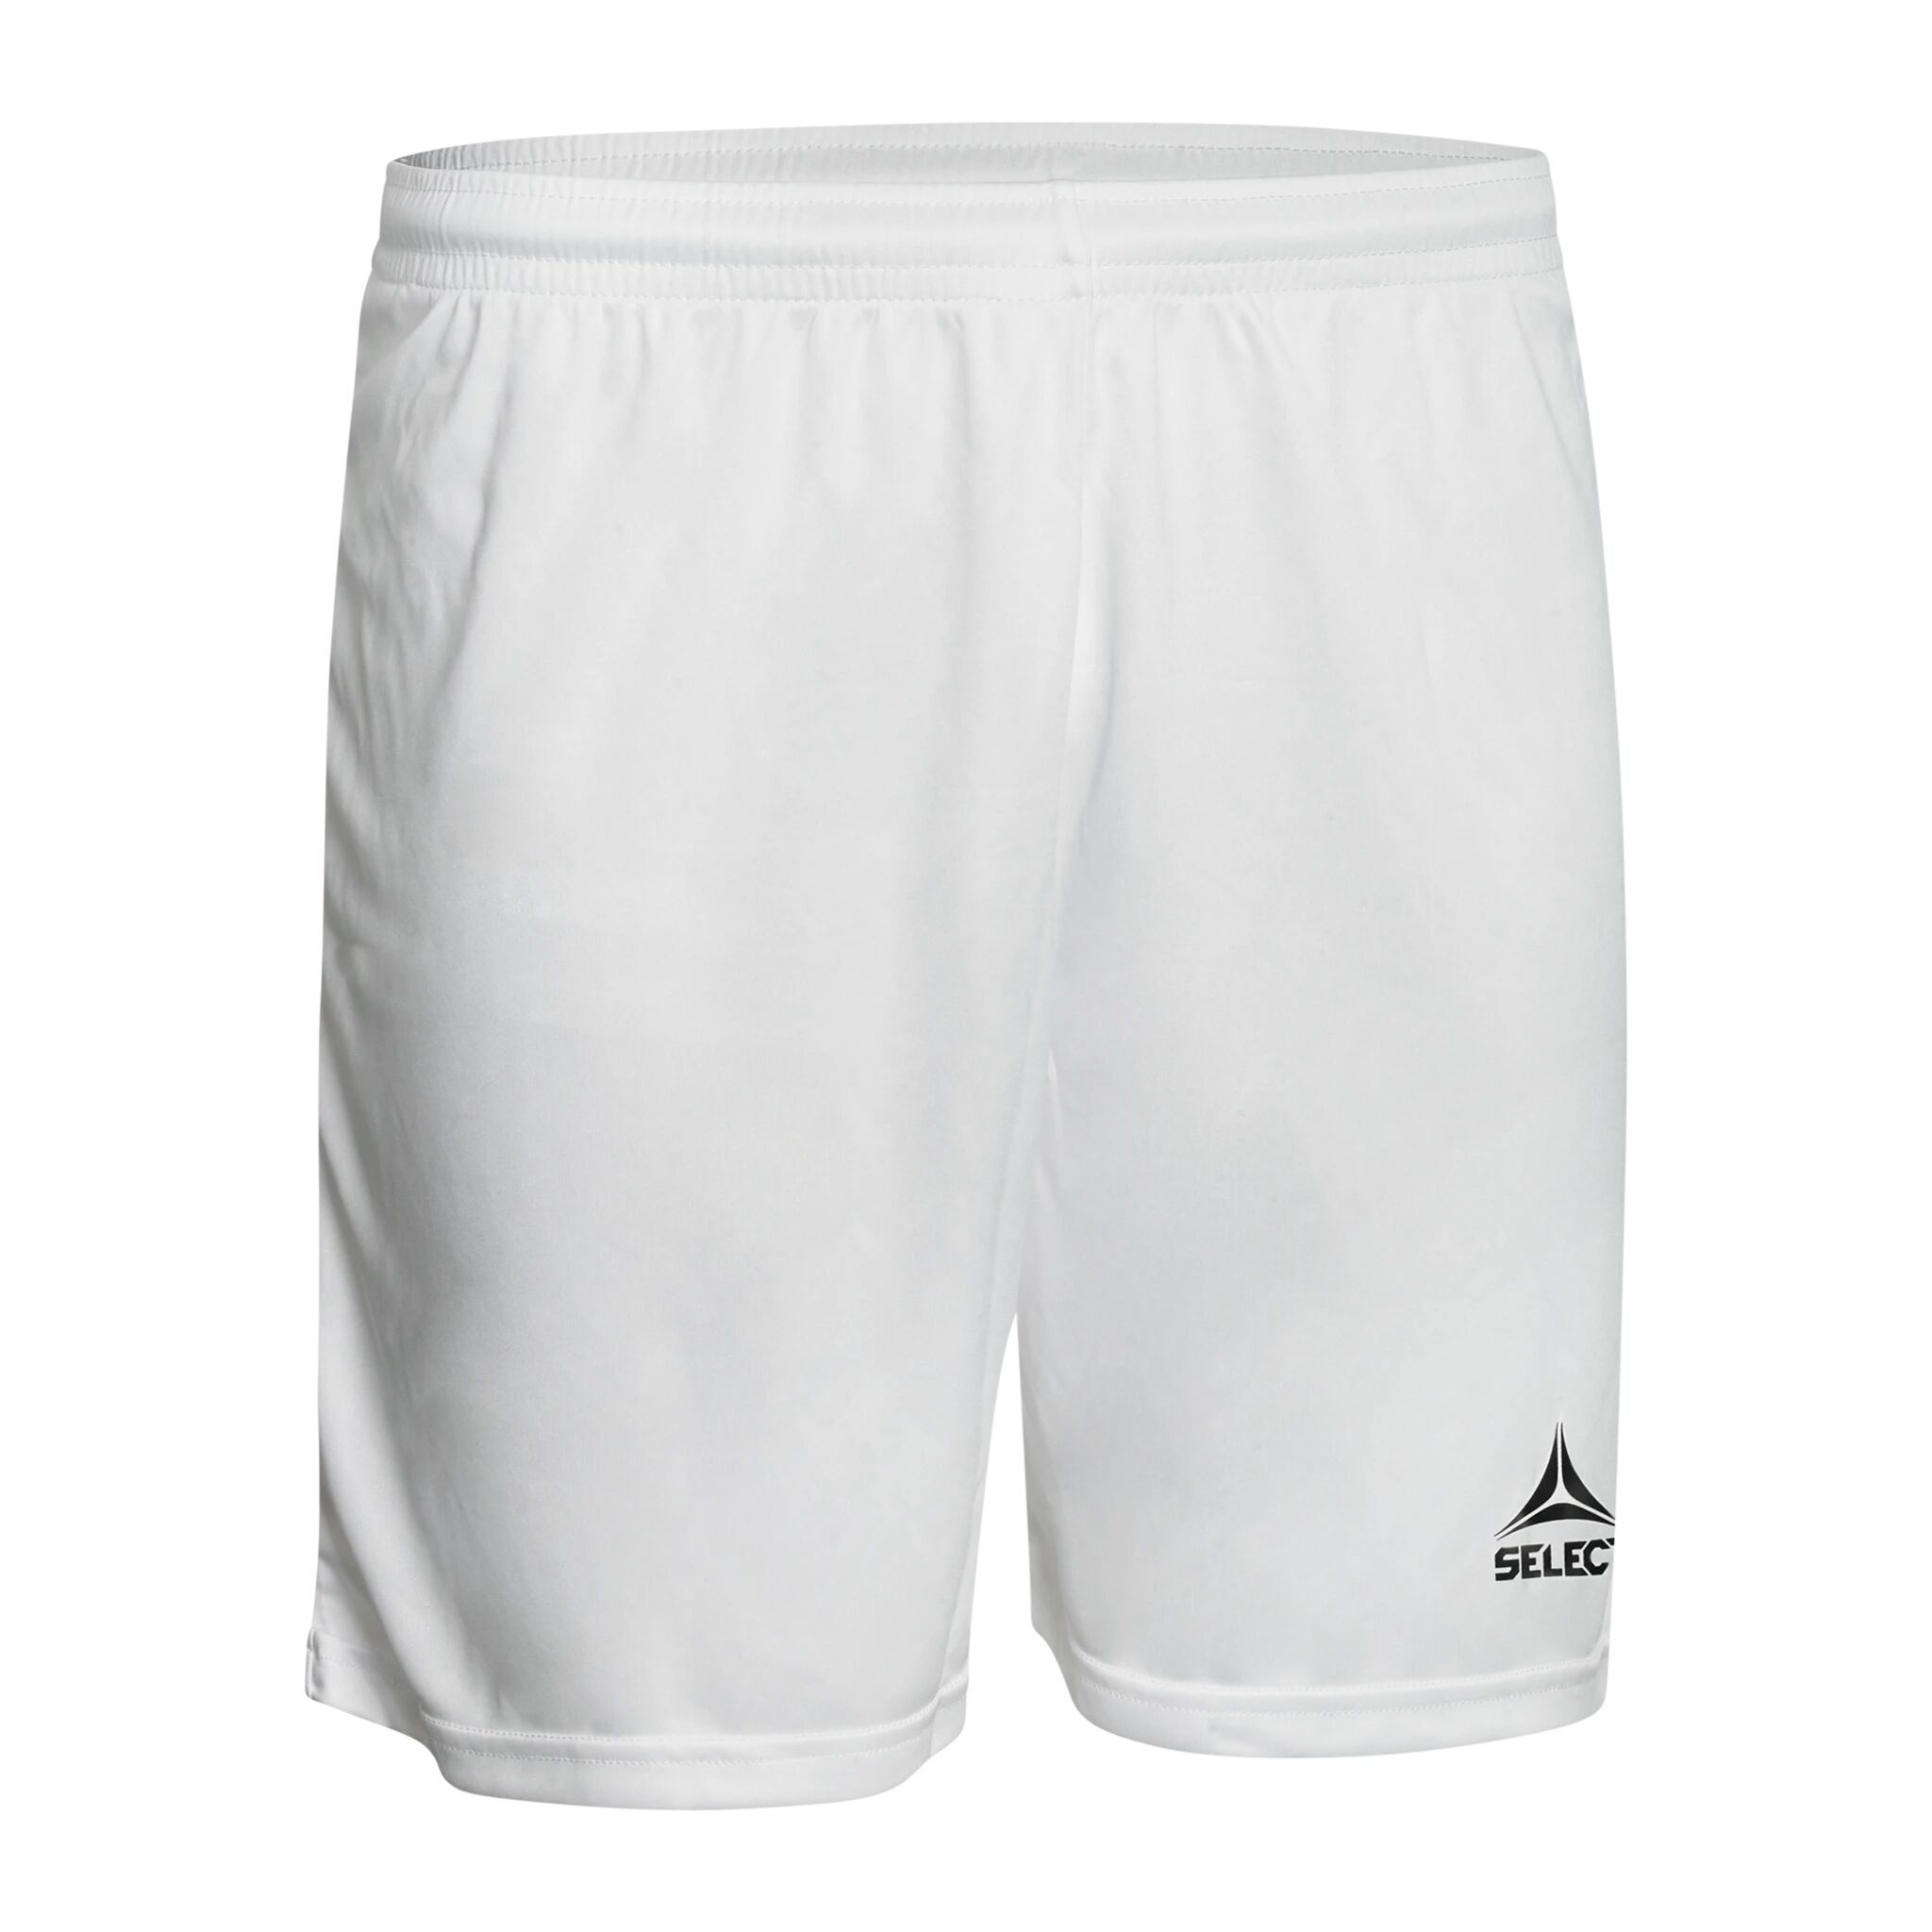 Select Player shorts Pisa, shorts senior XXXL White